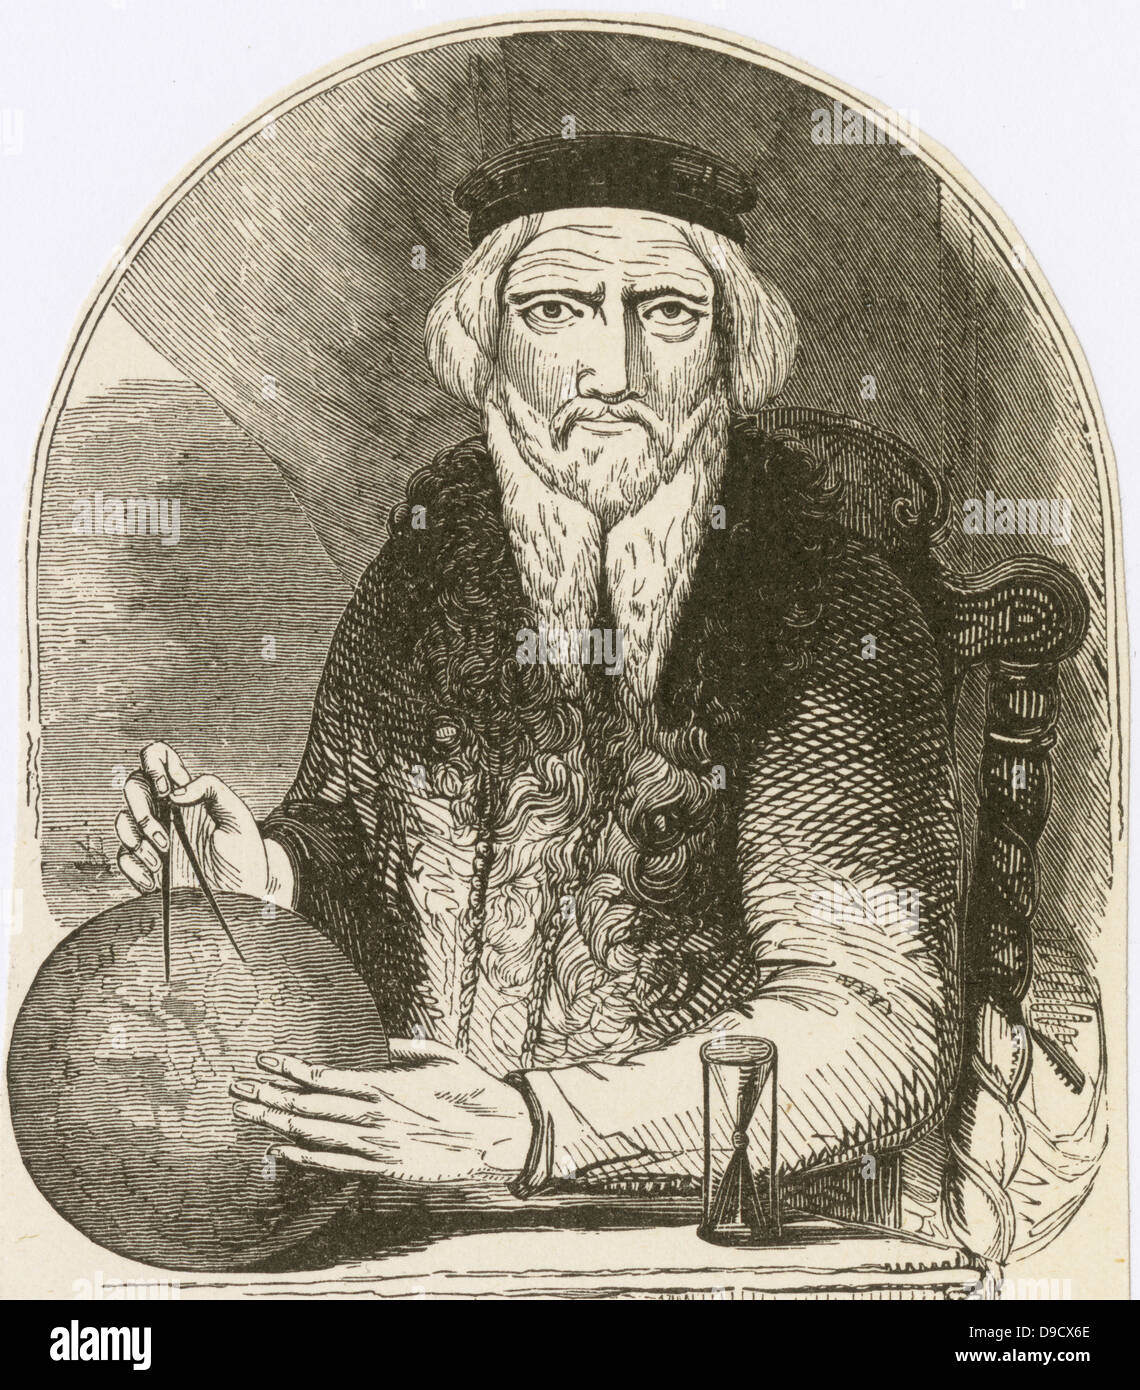 Sebastian Cabot (c1474-c1557) Venetian navigator and cartographer, son of John Cabot. Stock Photo